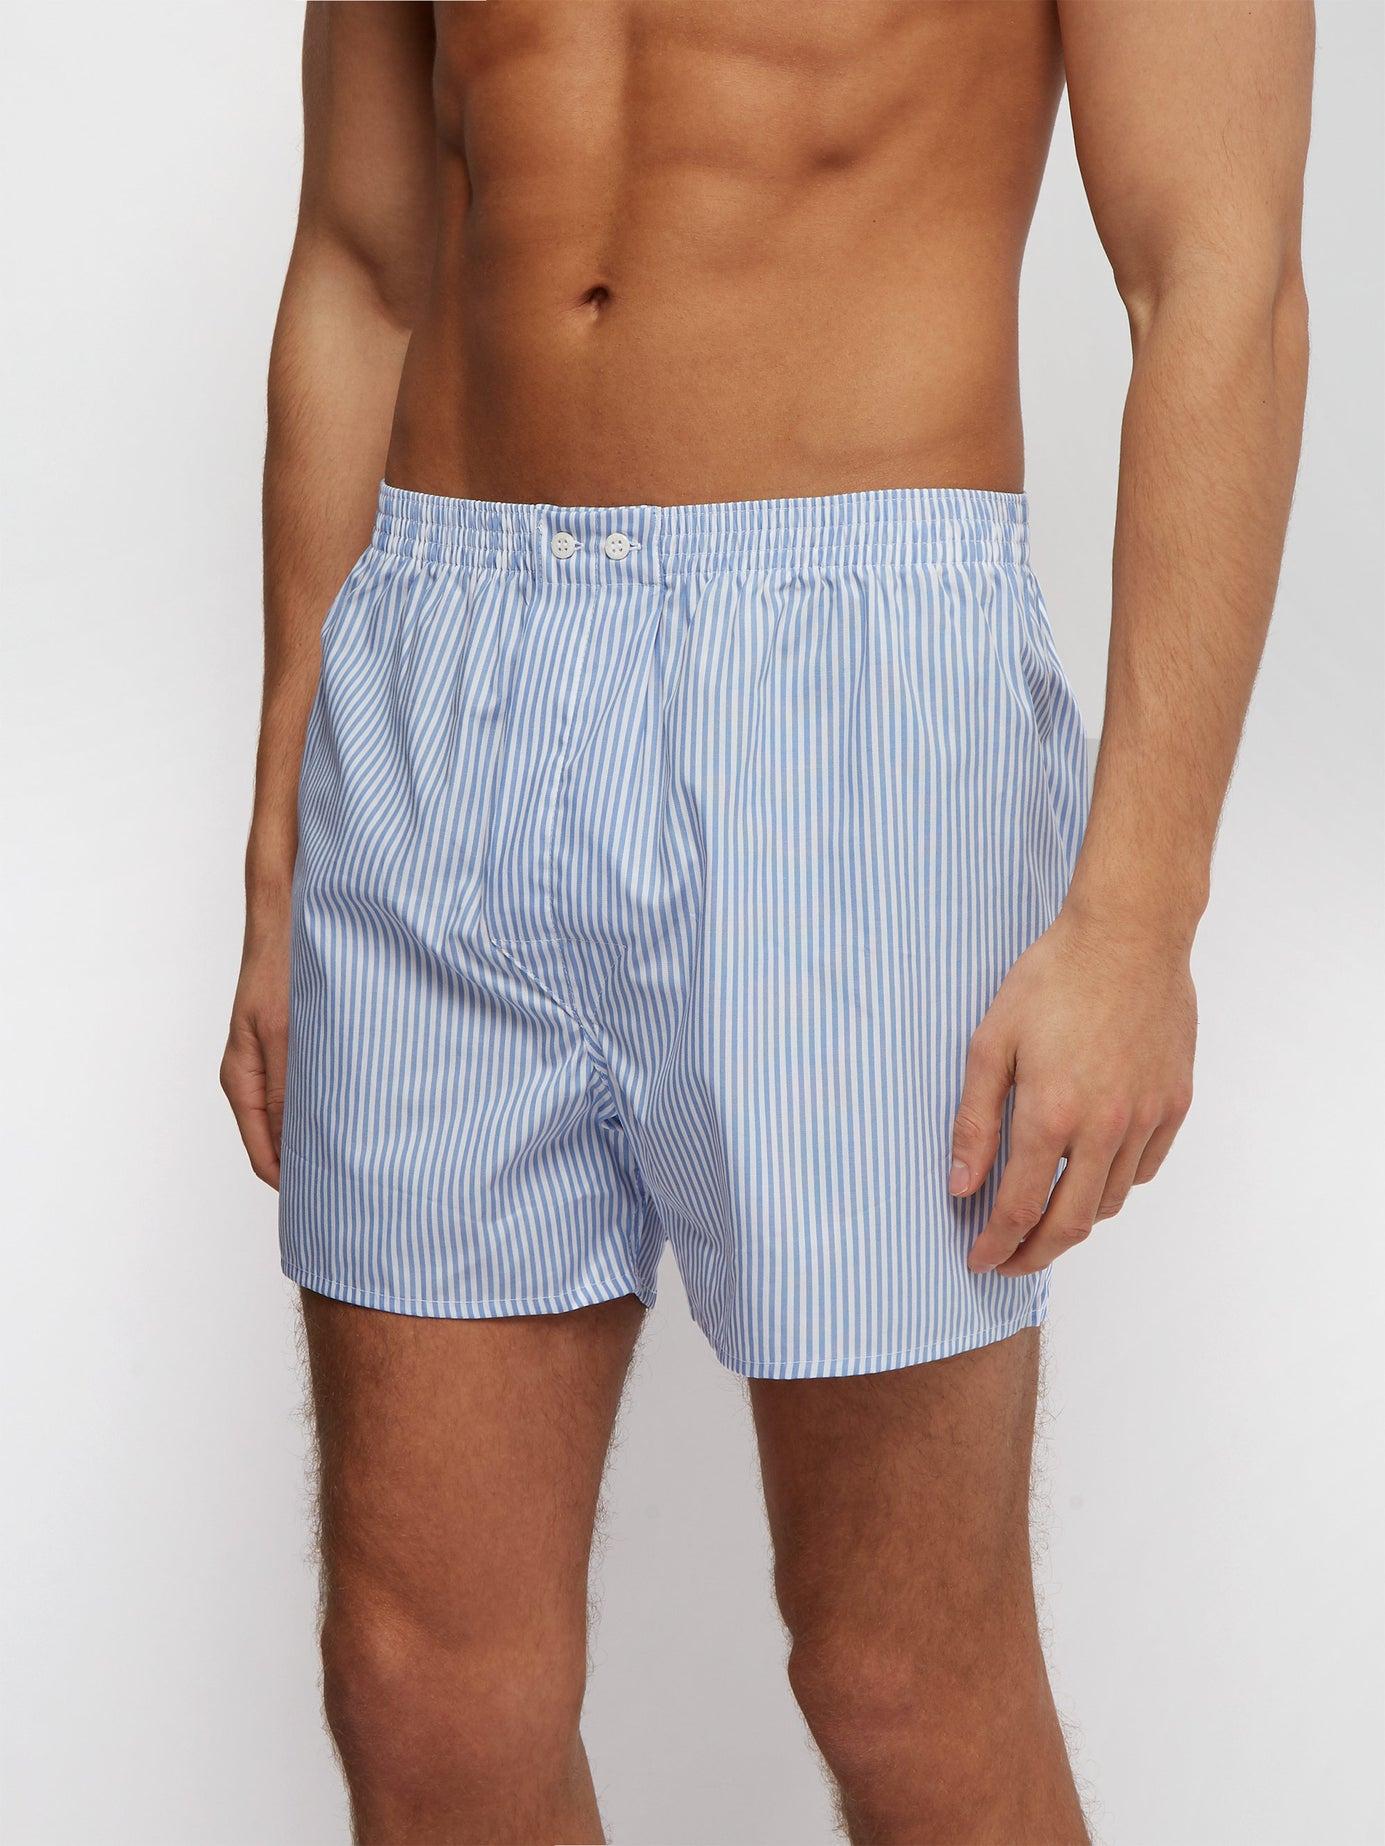 Derek Rose Candy-striped Cotton-poplin Boxer Shorts in Blue for Men - Lyst